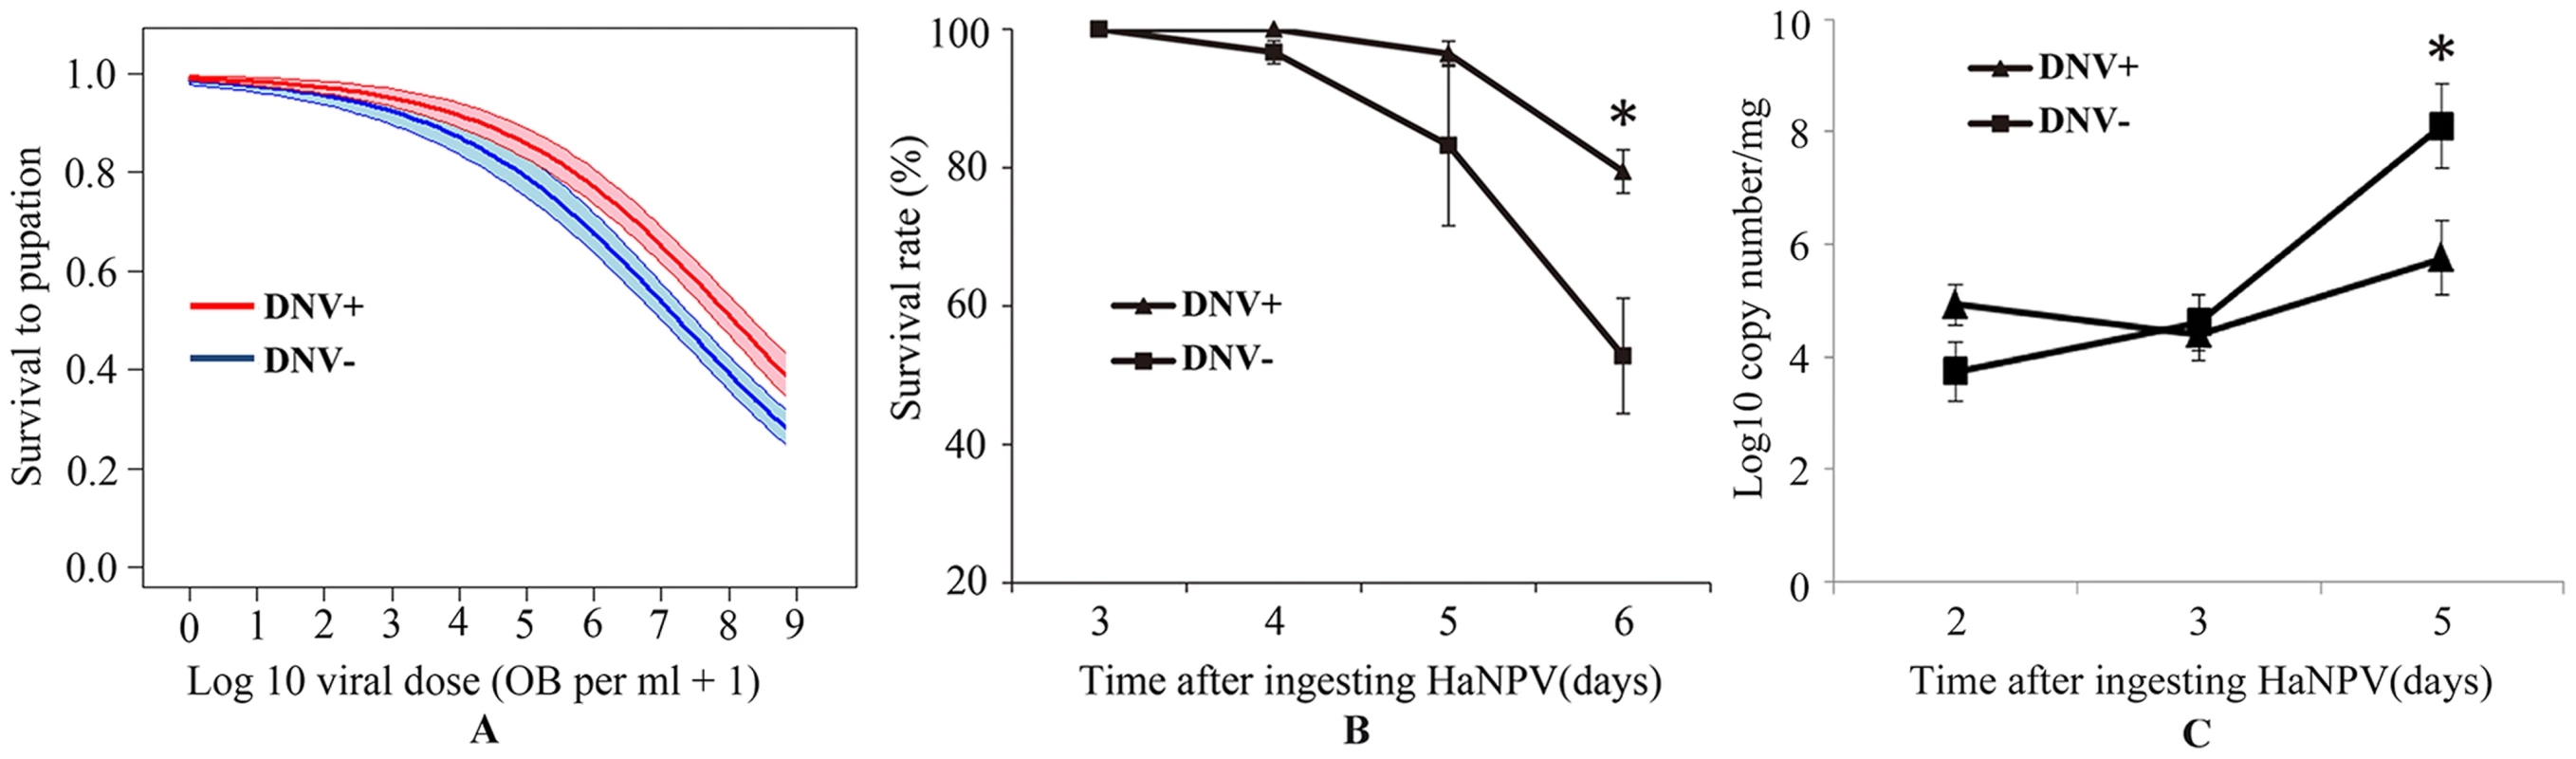 Relationship between the baculovirus HaNPV and the densovirus HaDNV-1 in cotton bollworm larvae.